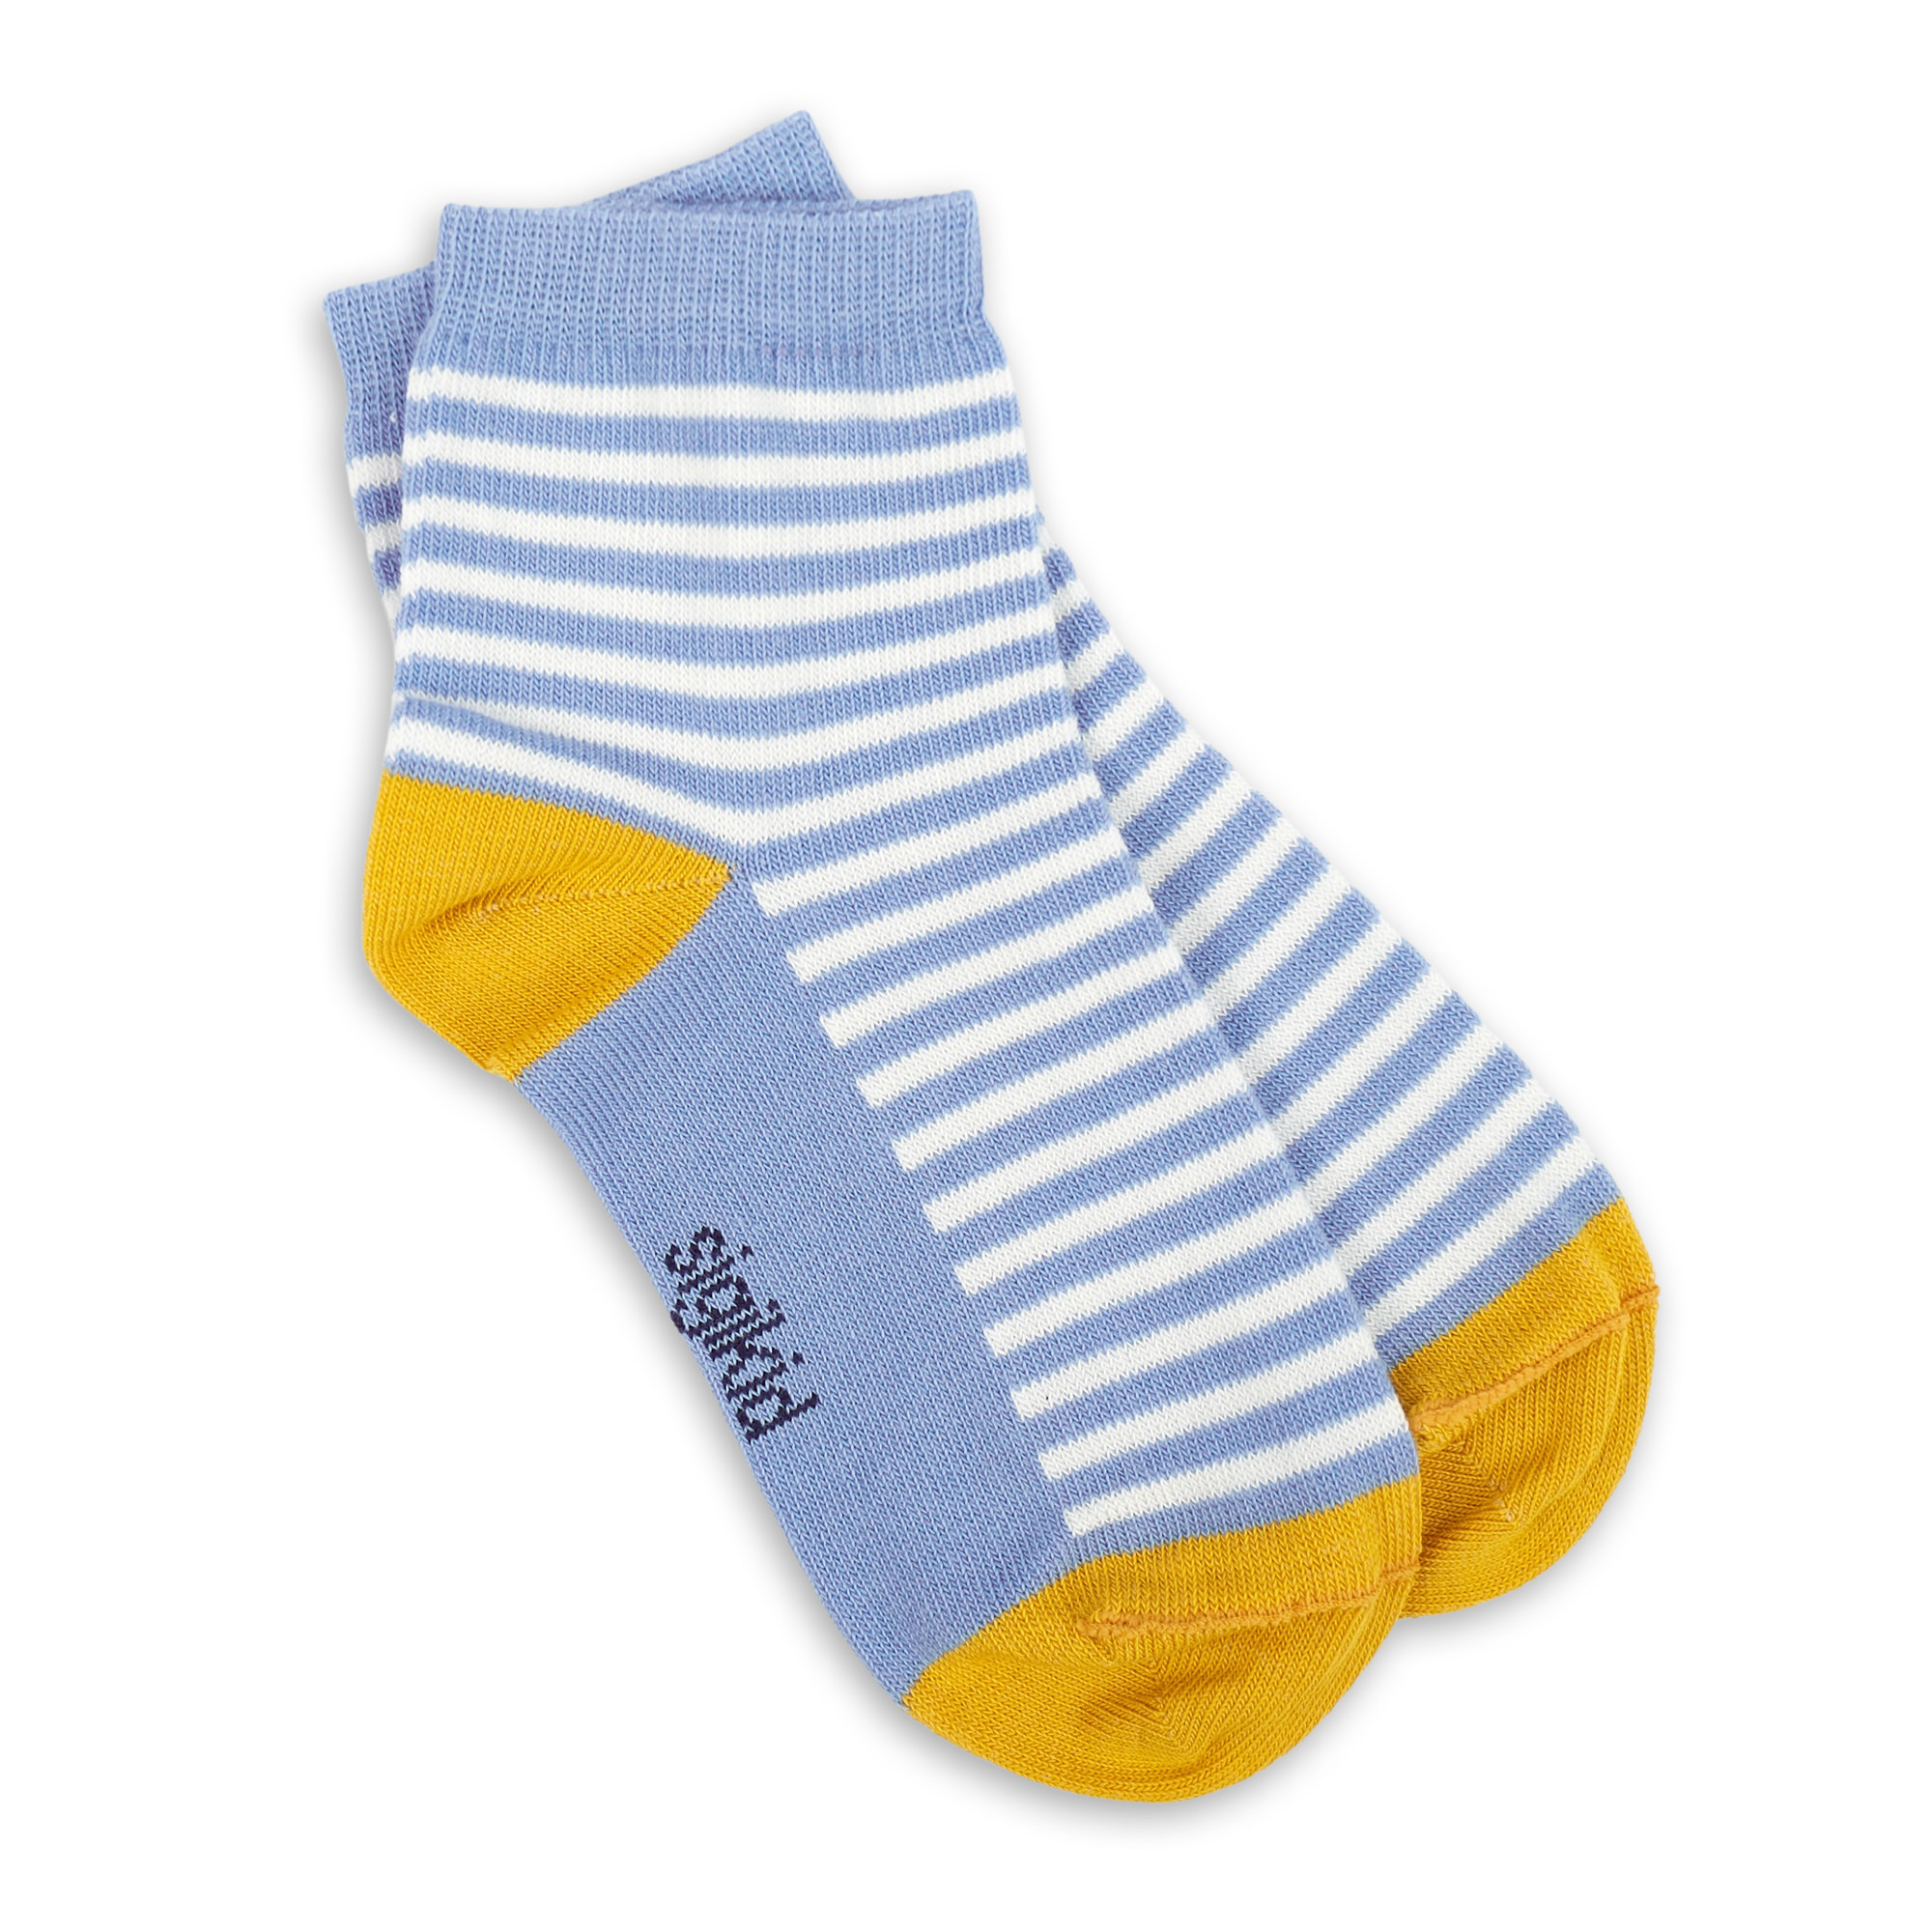 3 pair set children's socks, navy/blue/yellow